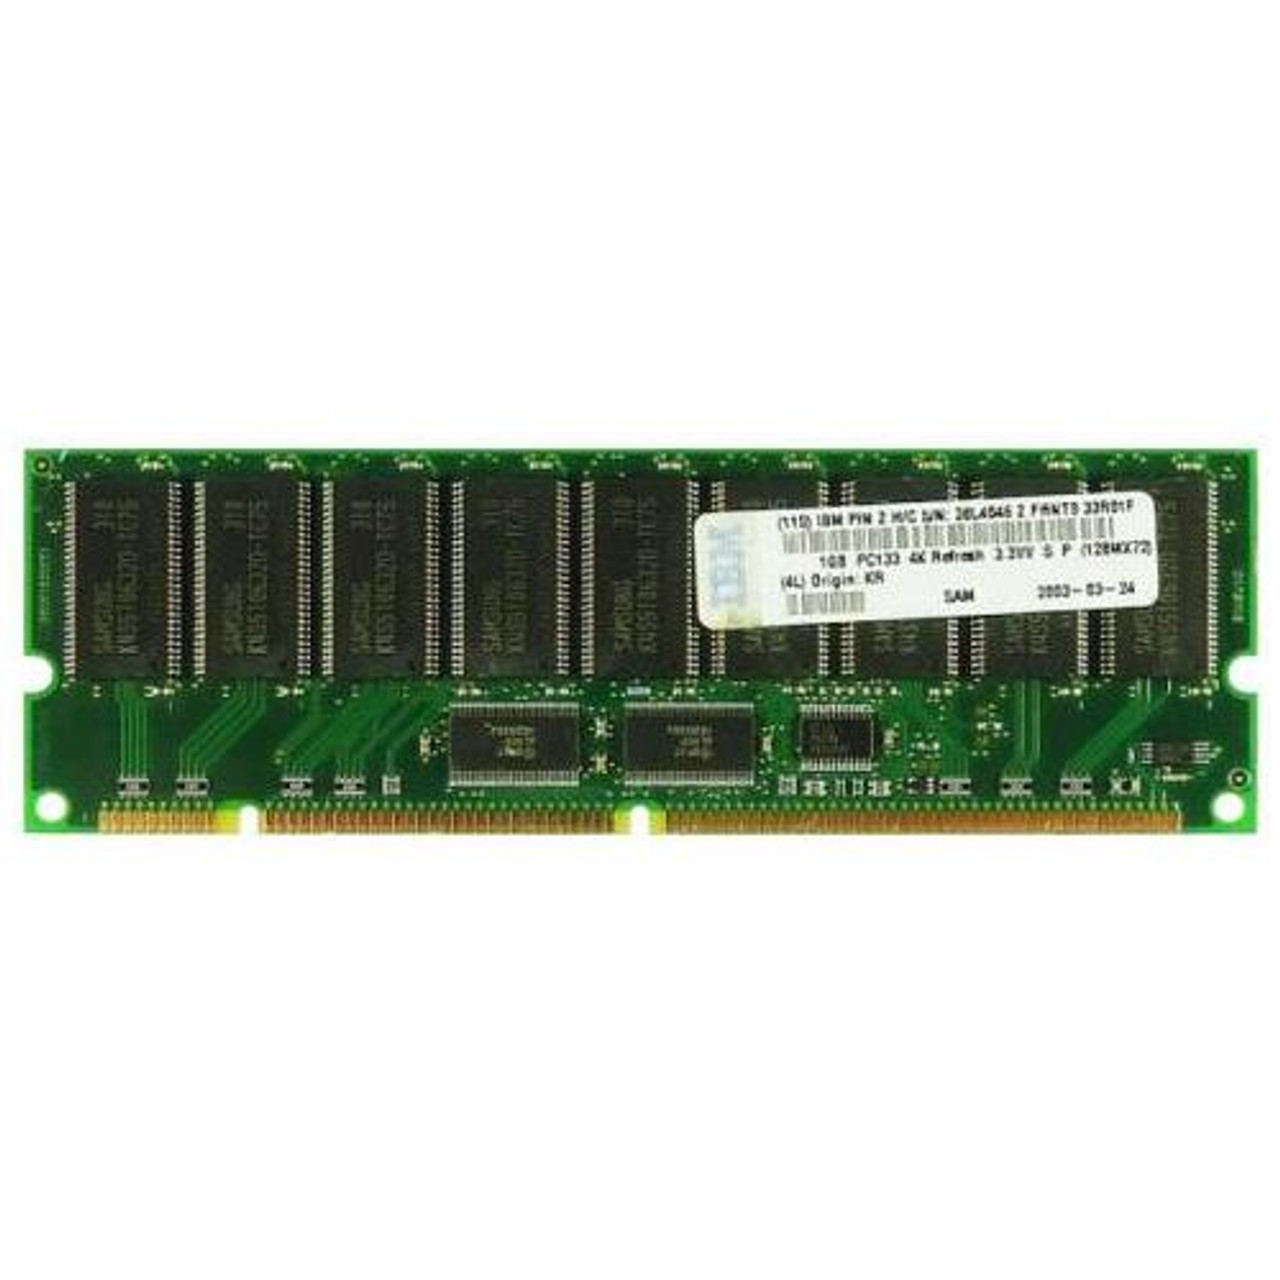 38L4046 IBM 1GB SDRAM Registered ECC PC-133 133Mhz Server